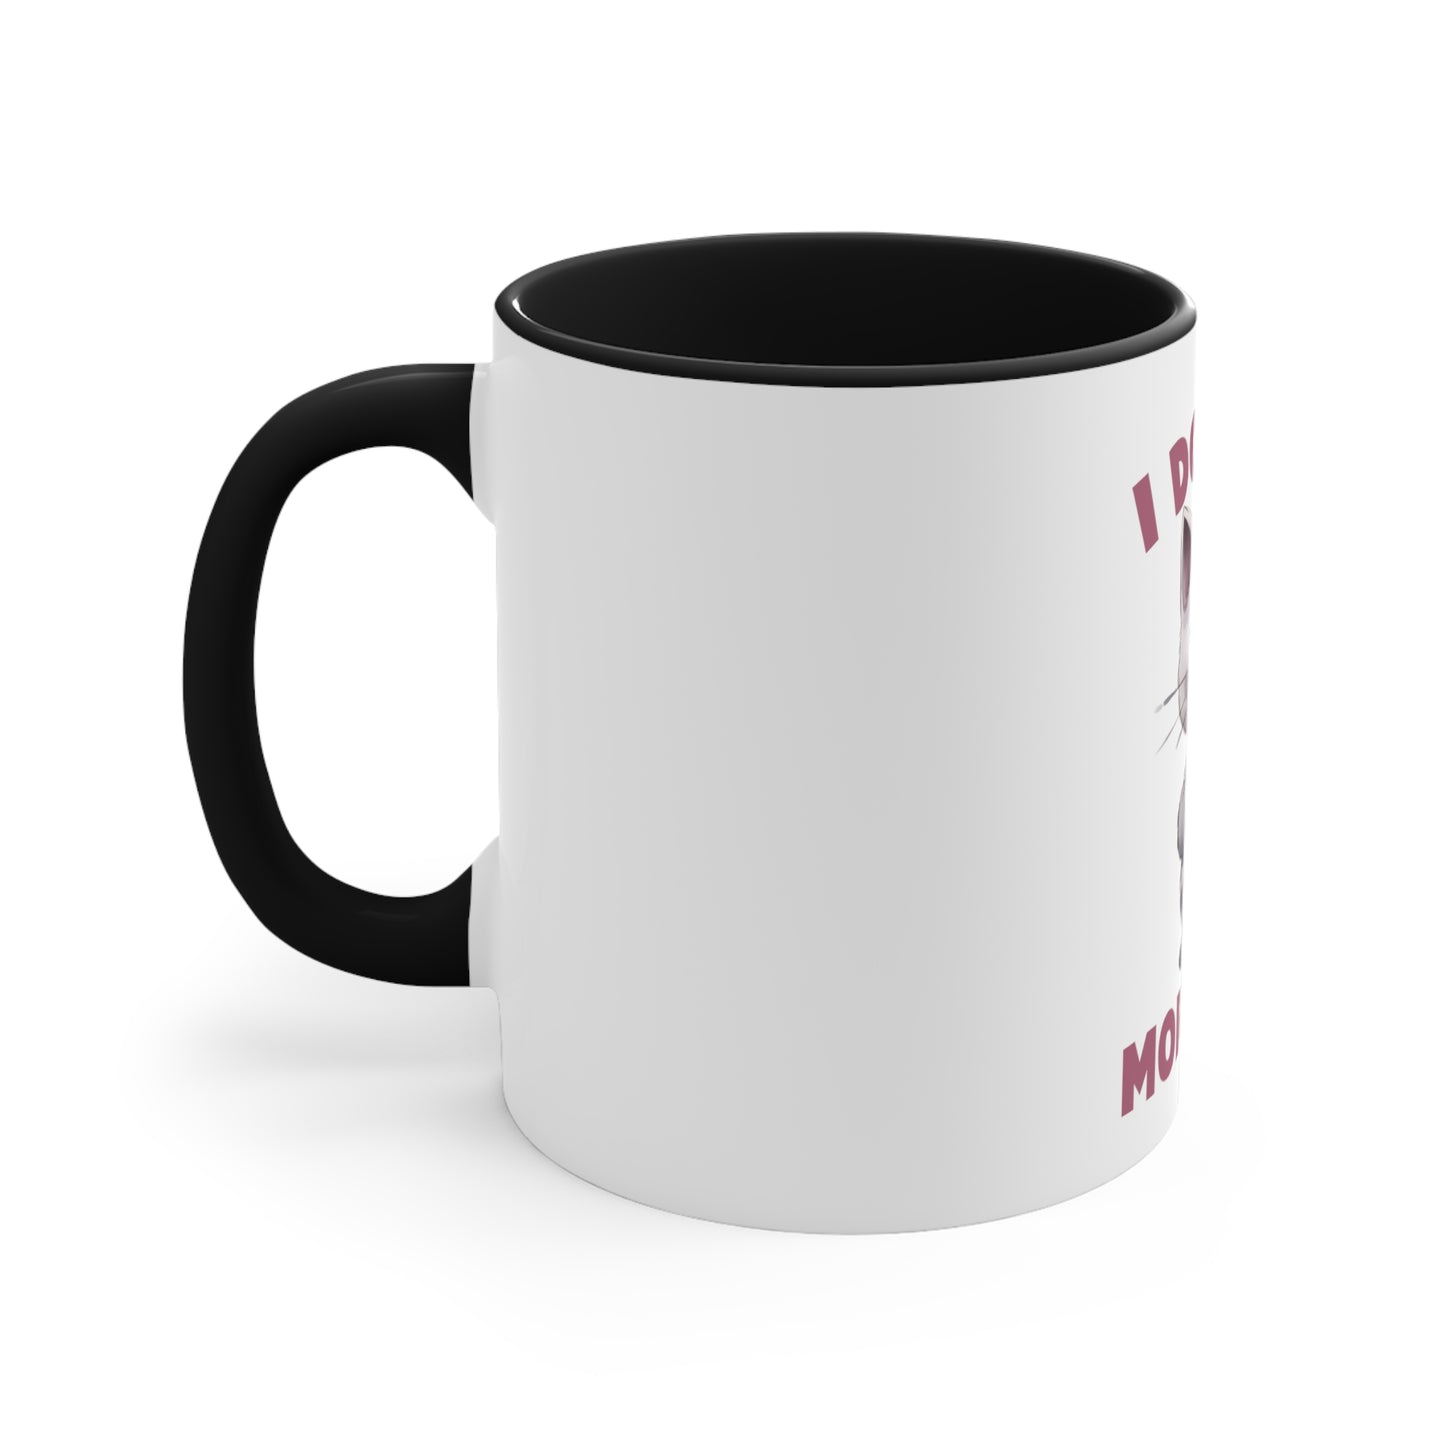 I don't do Mornings - Accent Coffee Mug, 11oz